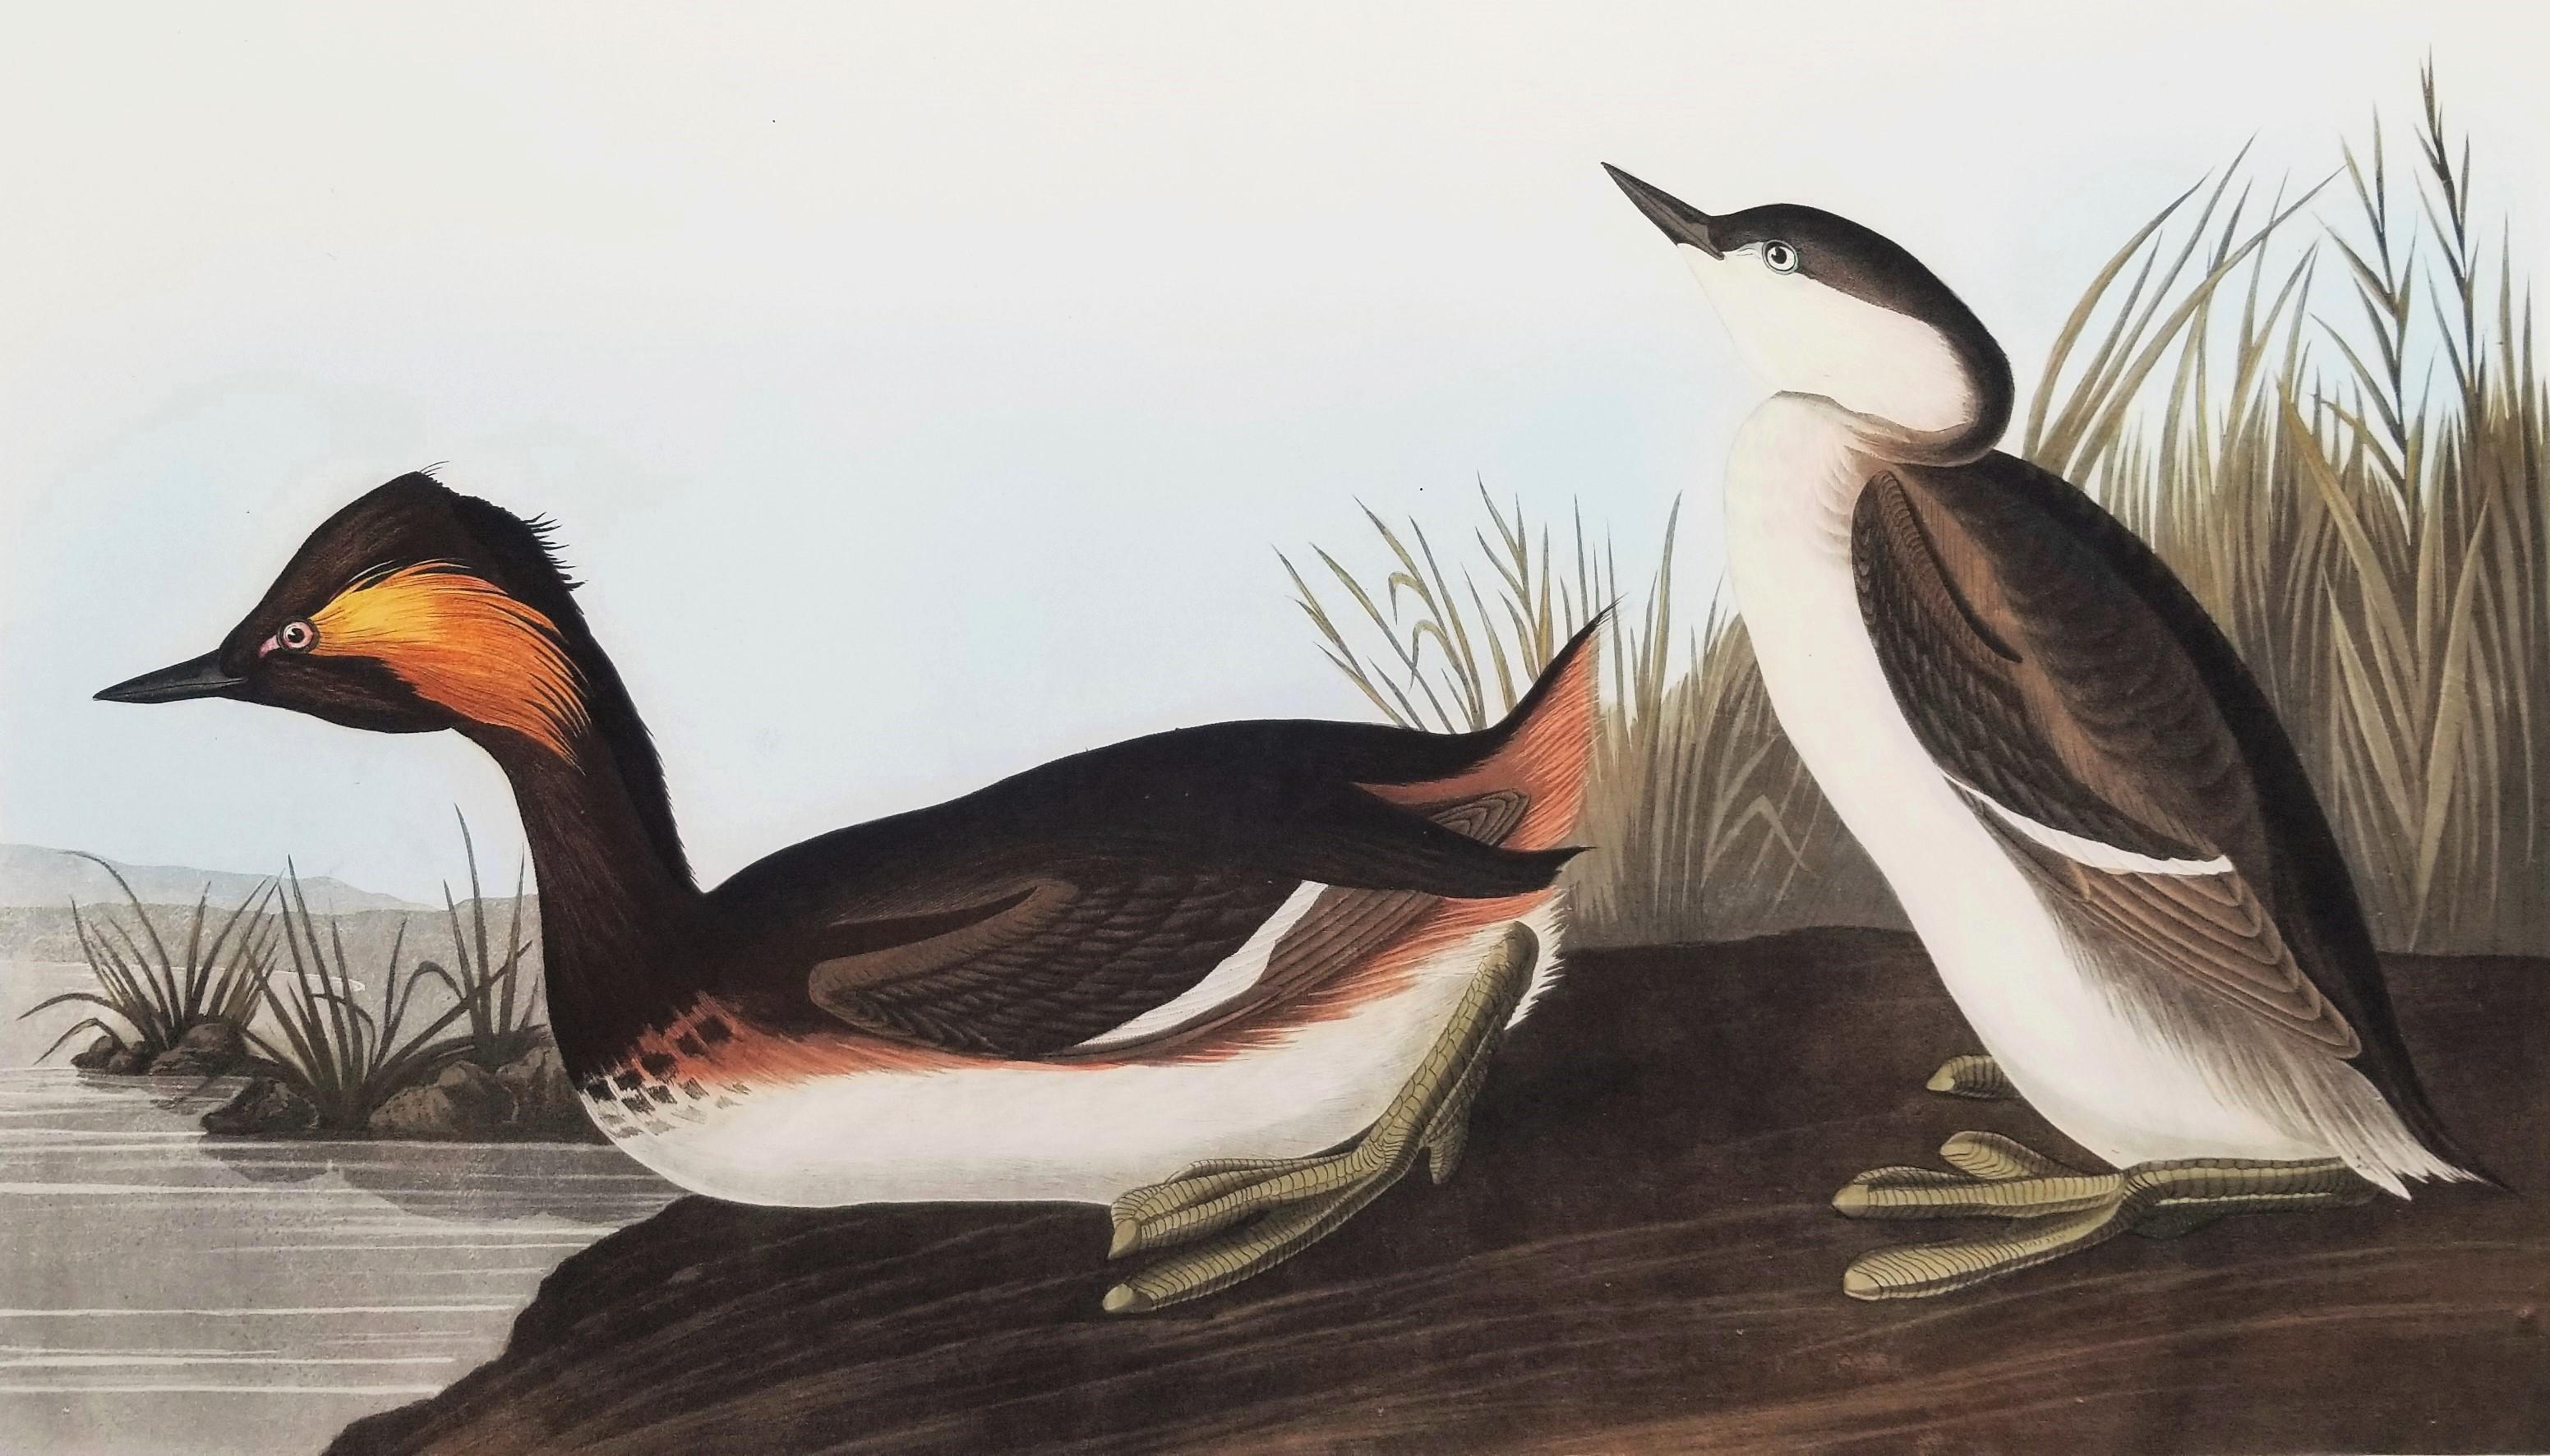 What was John James Audubon’s art style?